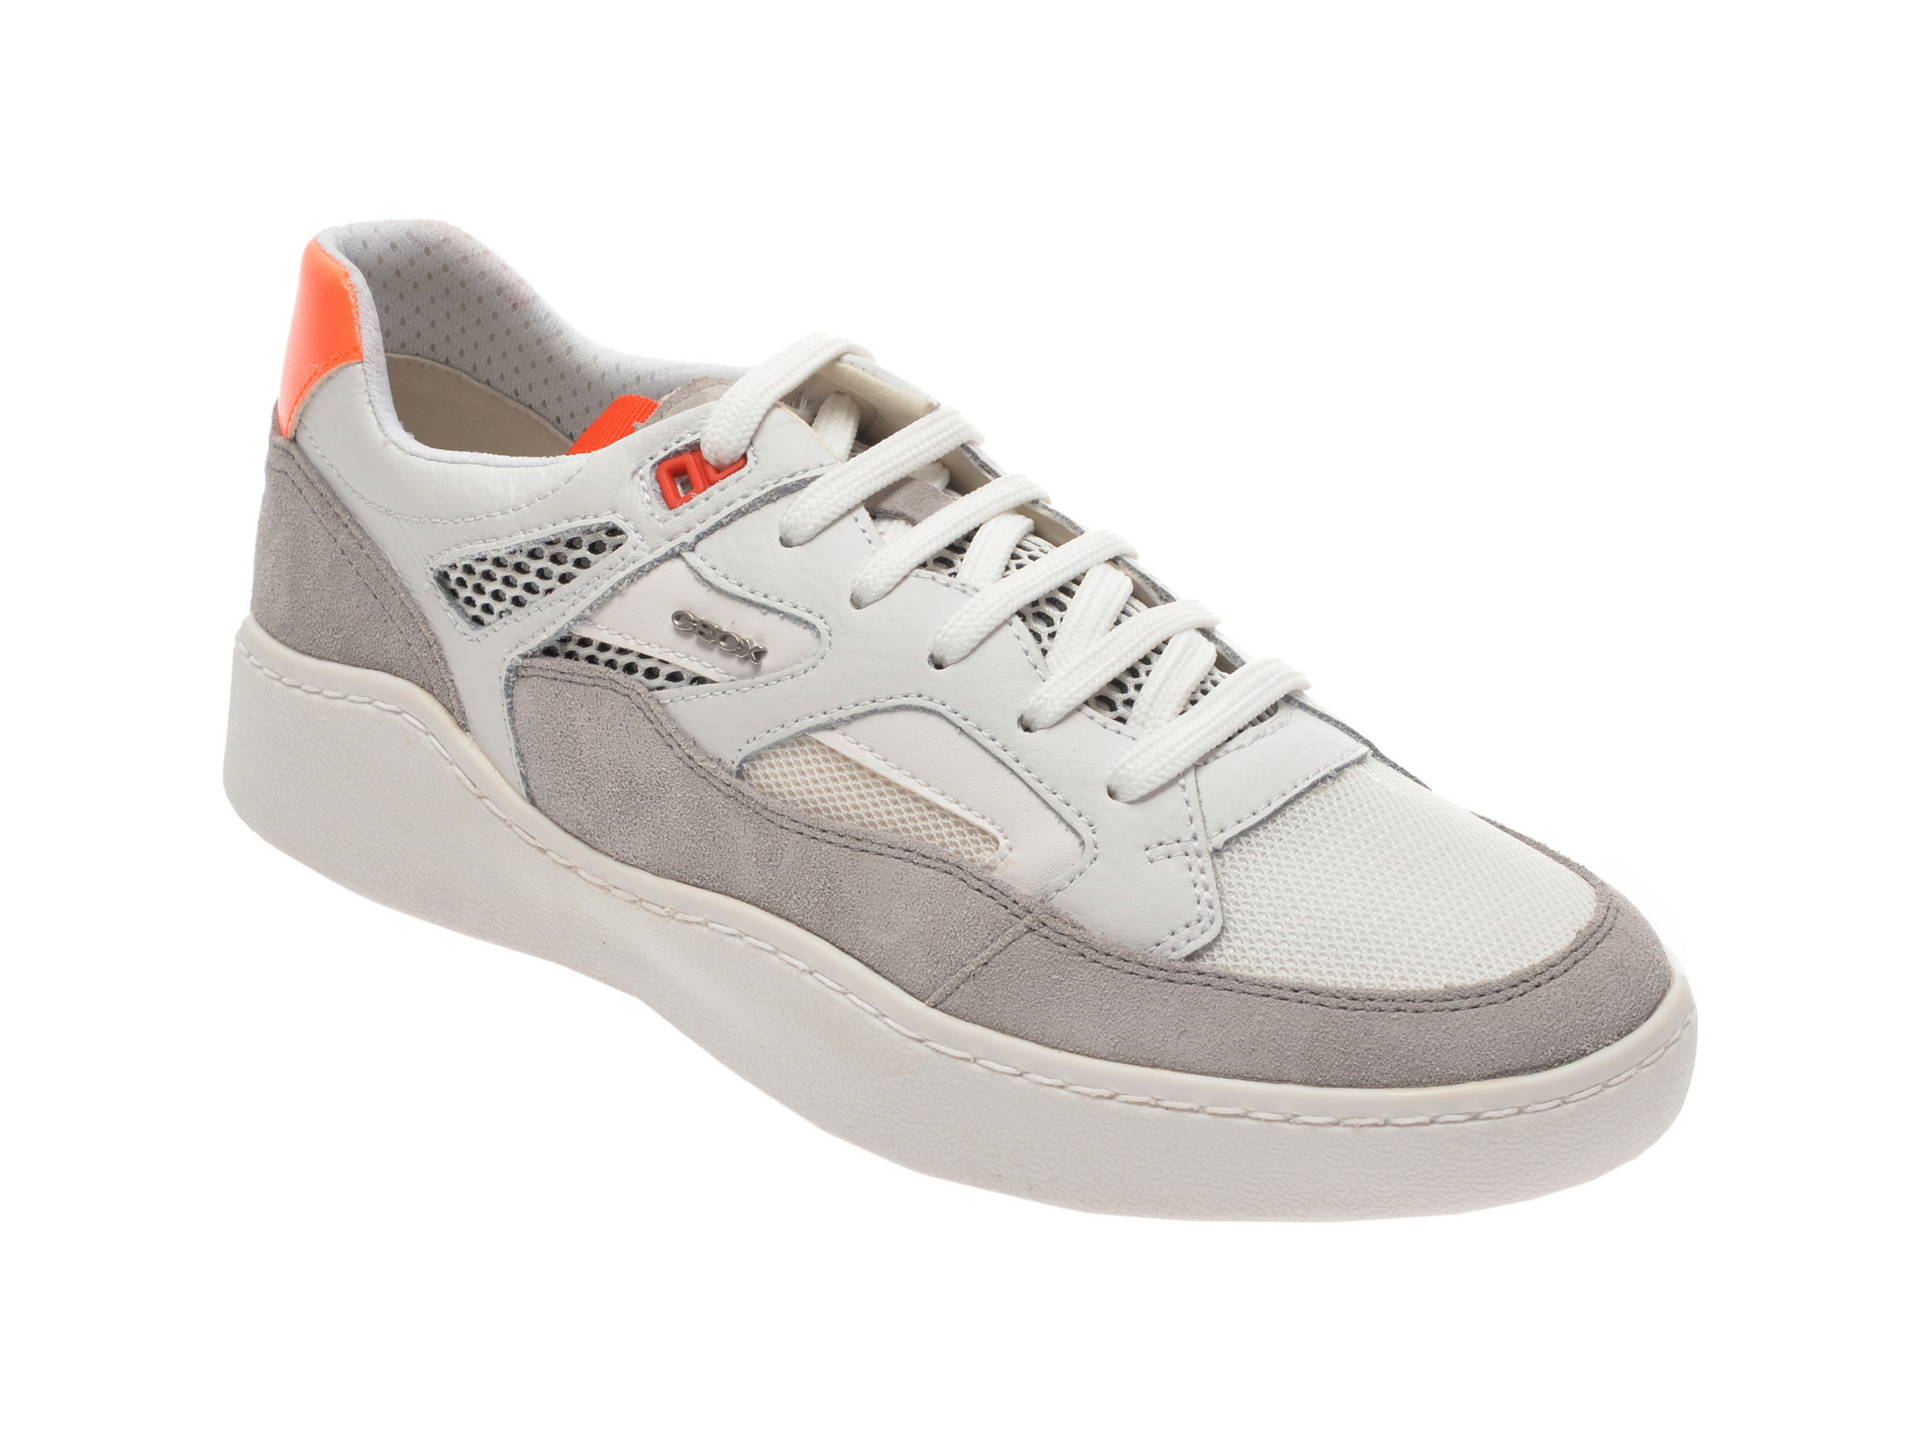 Pantofi sport GEOX albii, U027XA, din material textil si piele naturala